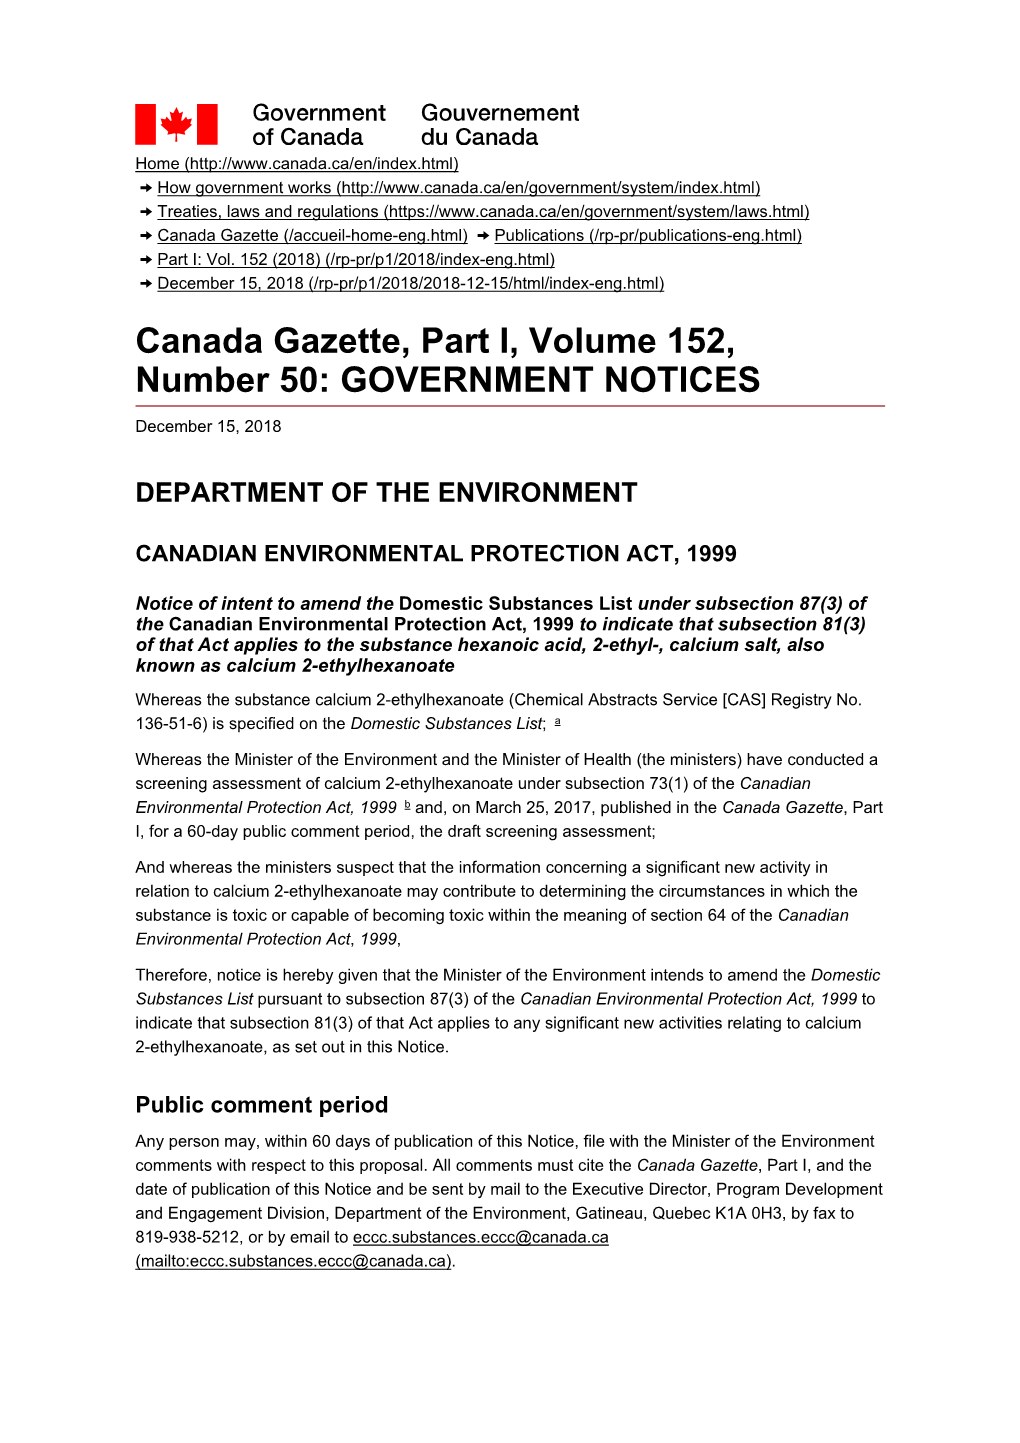 Canada Gazette, Part I, Volume 152, Number 50: GOVERNMENT NOTICES